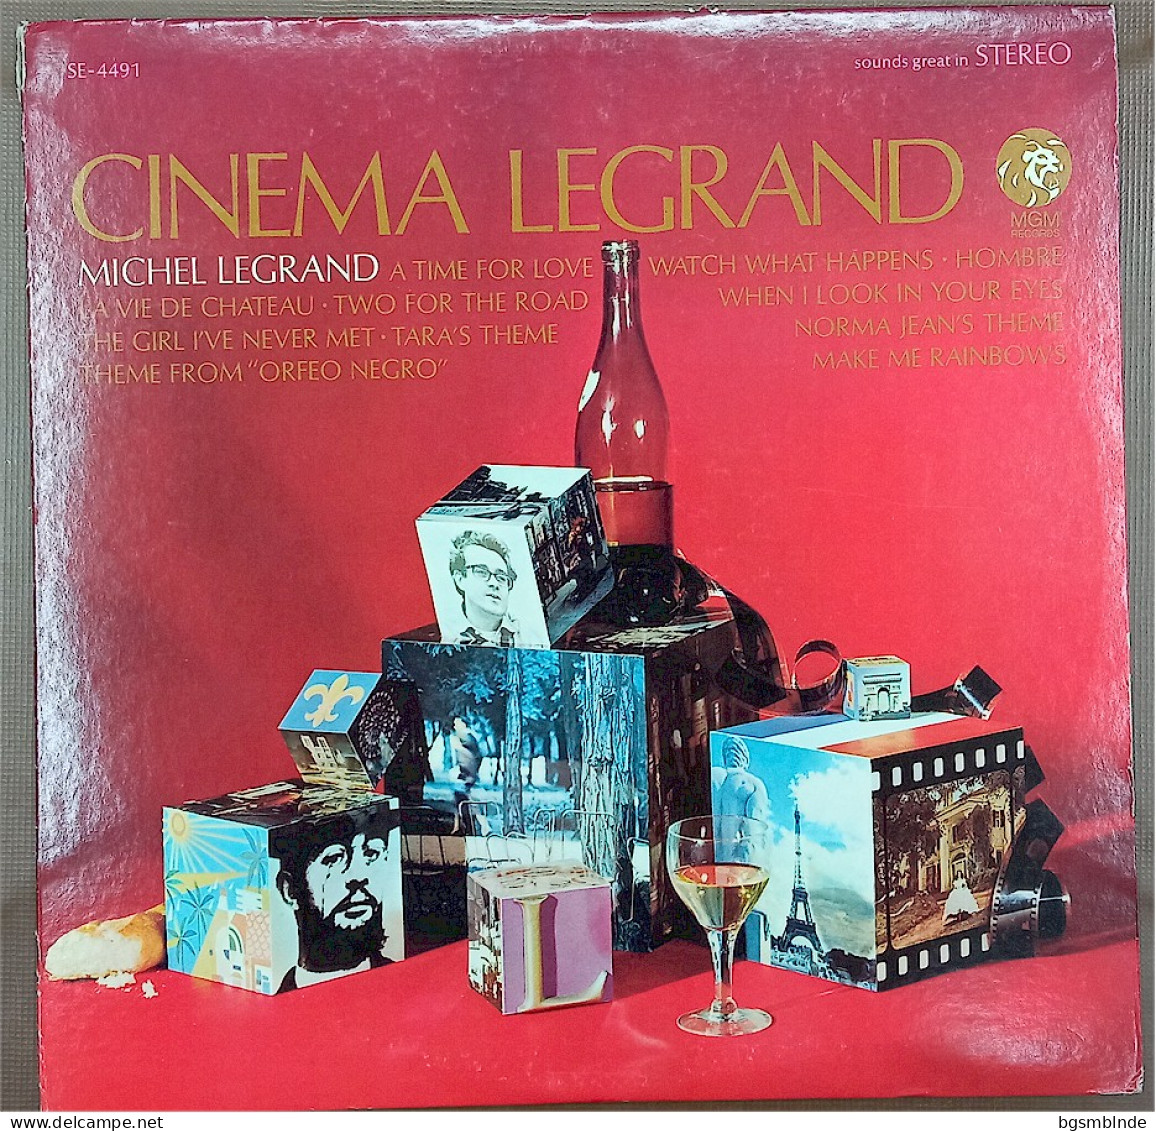 Cinema Legrand - Michel Legrand - Other - German Music